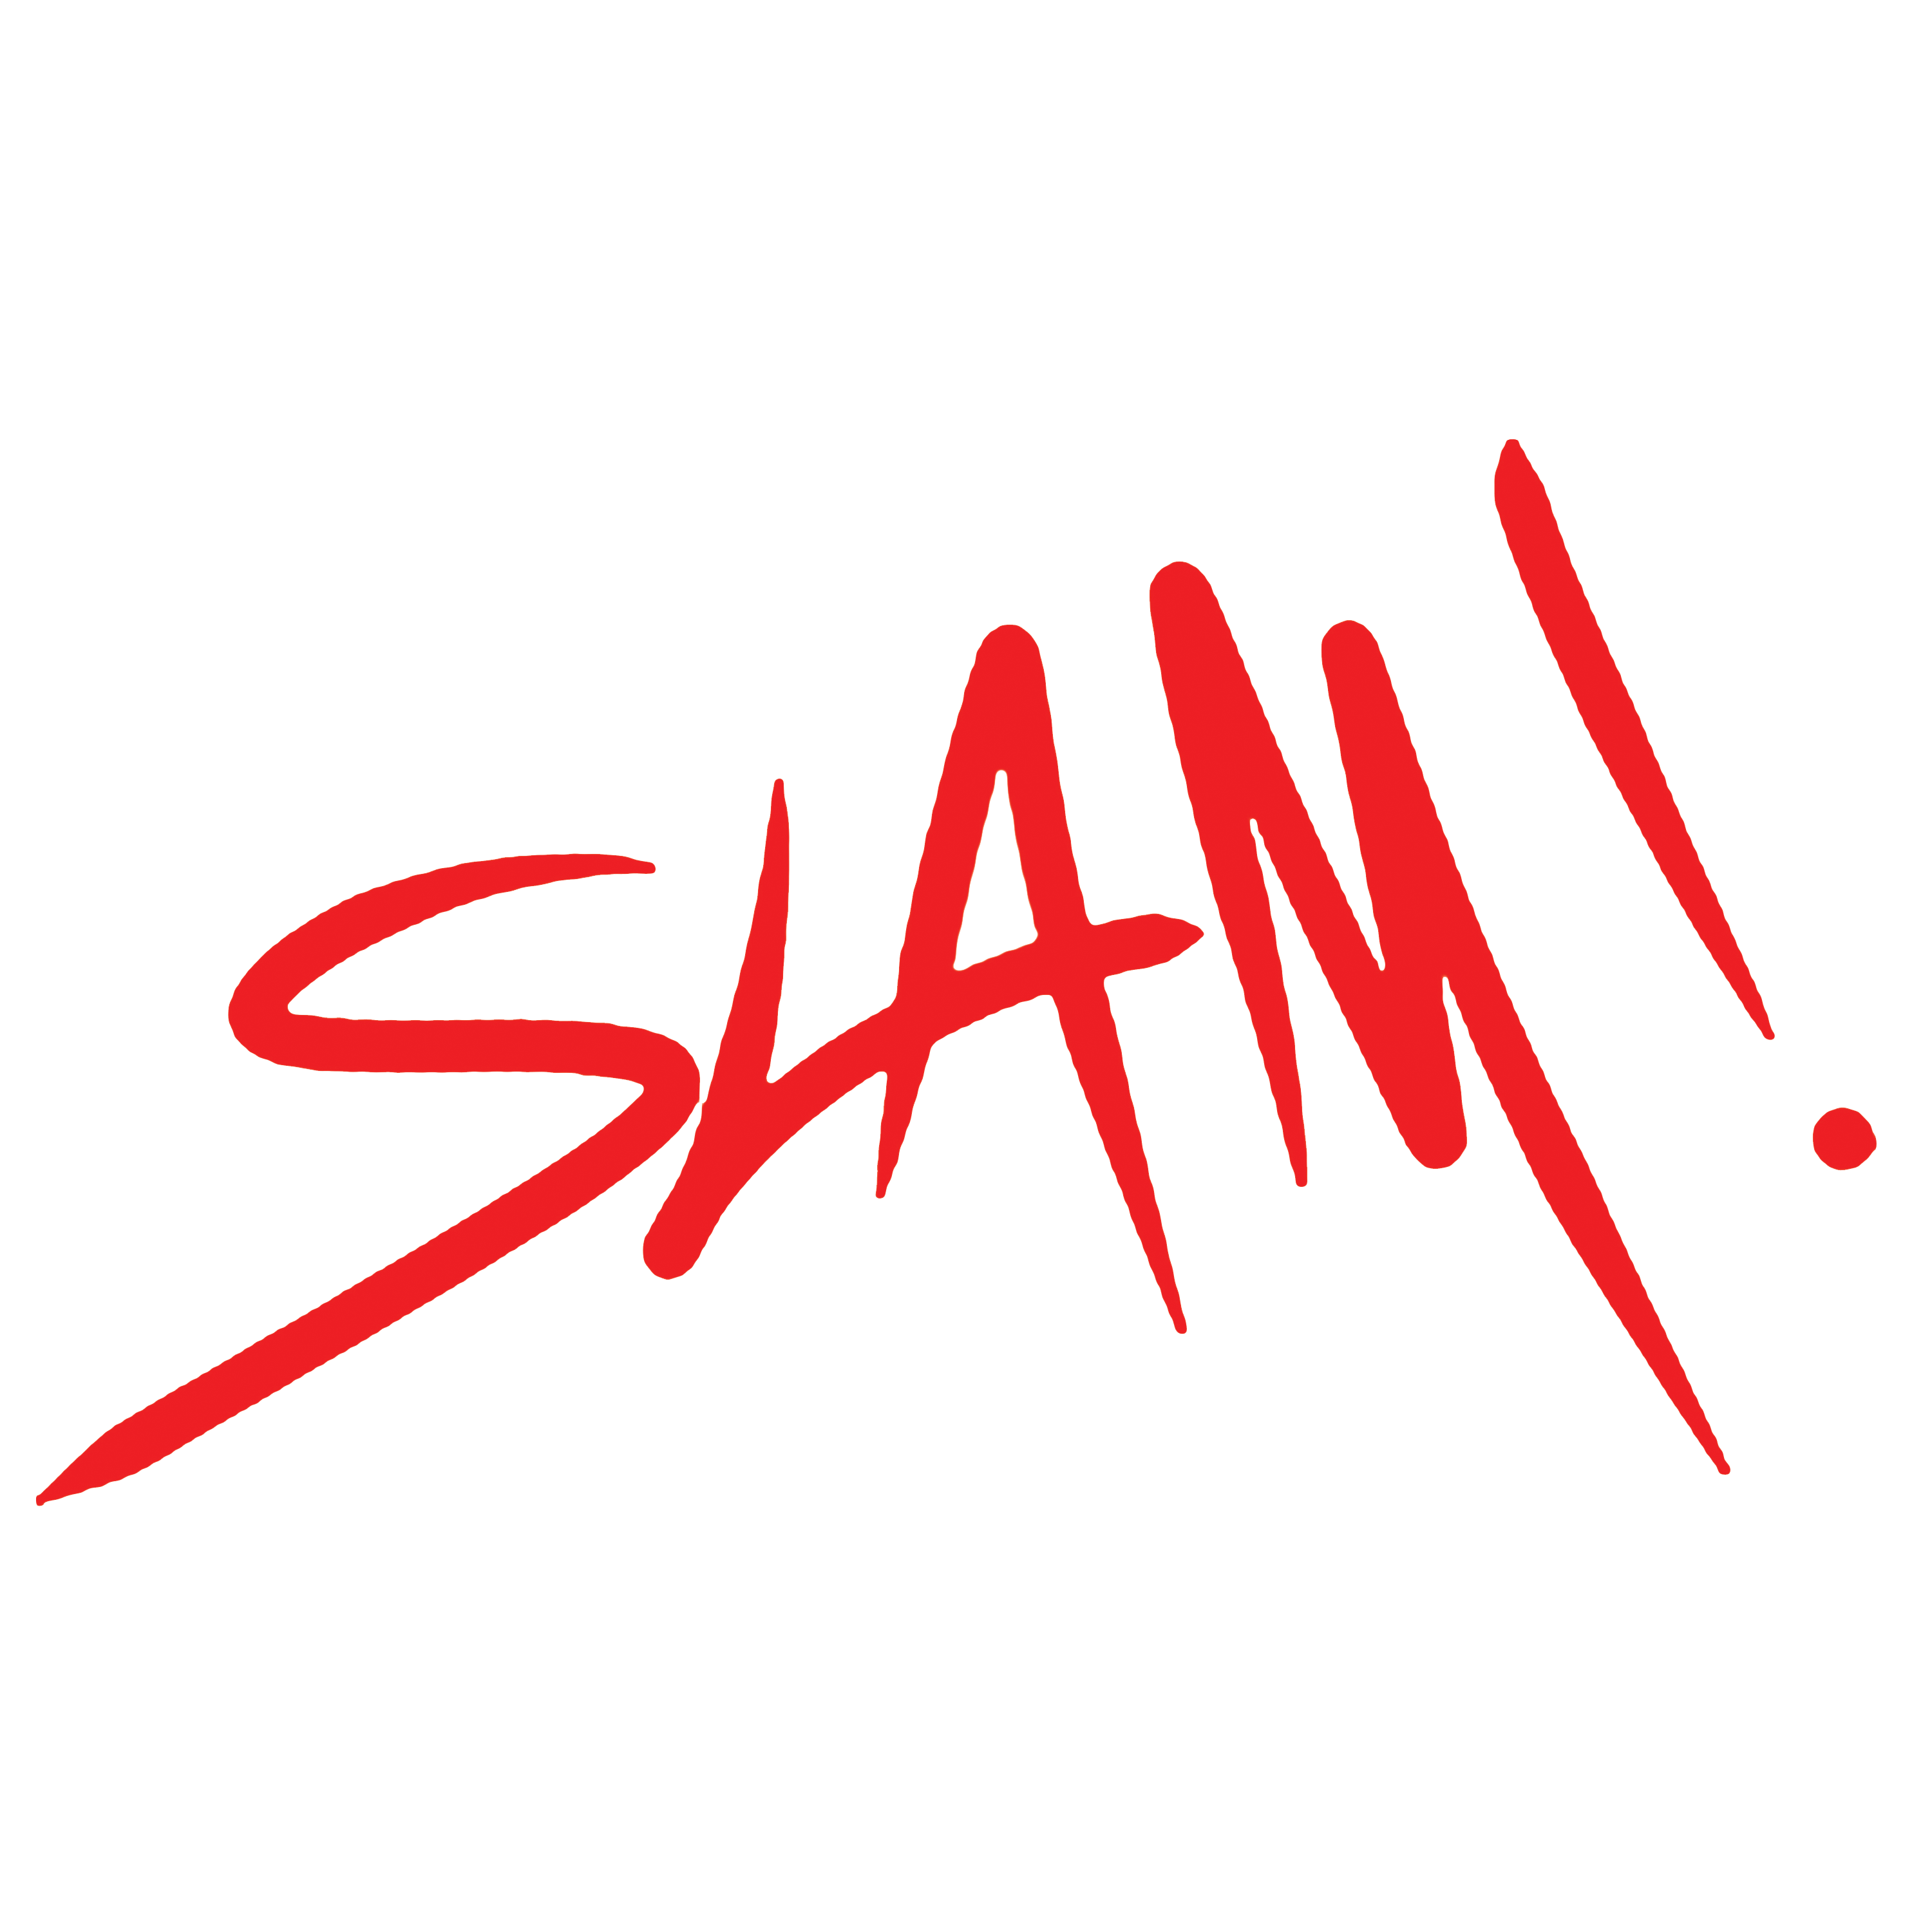 Slam Logo - Slam Png & Free Slam.png Transparent Image